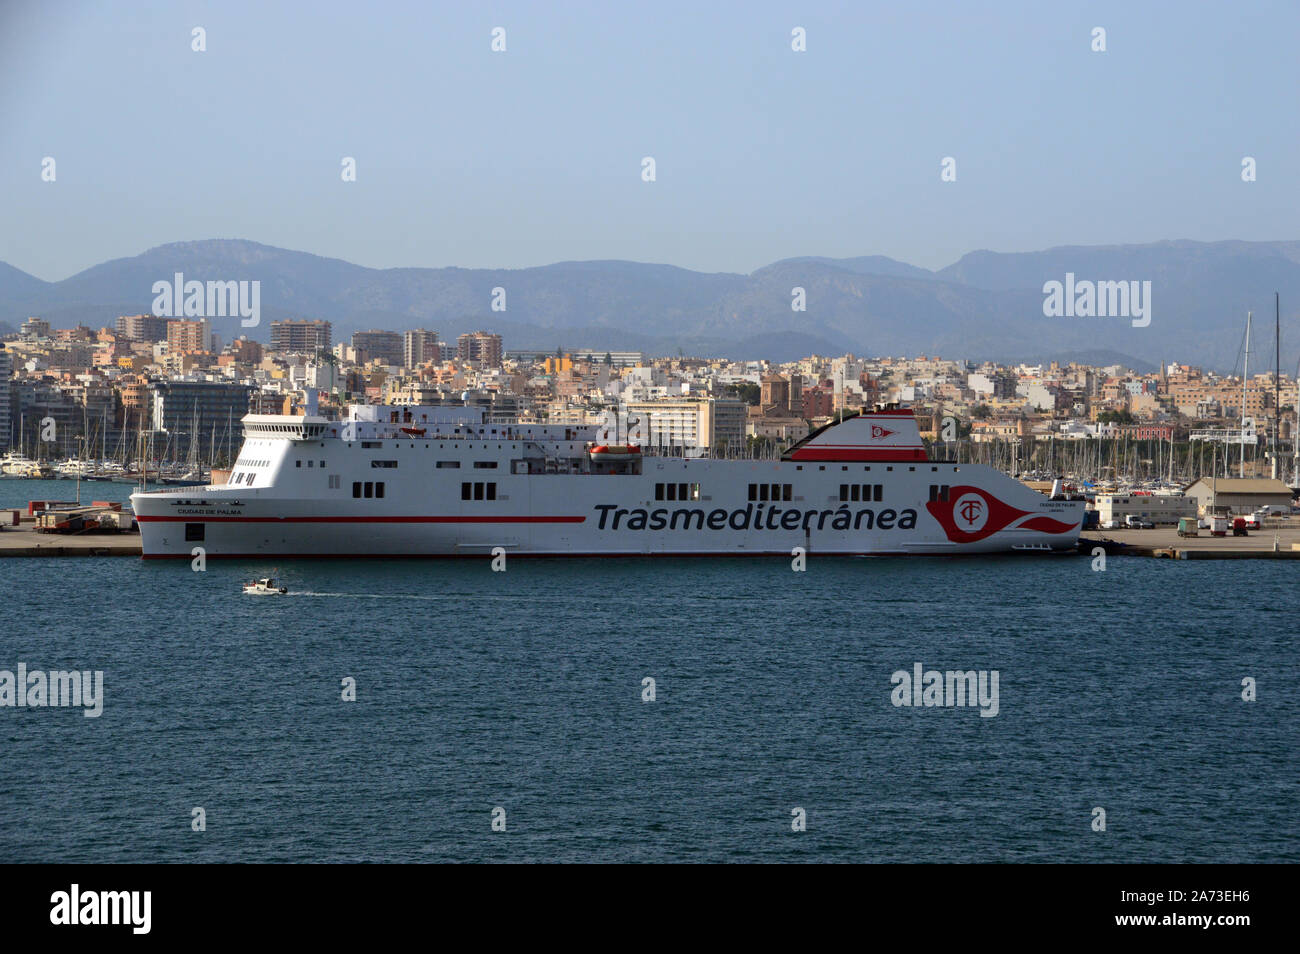 Trasmediterranea 'Ciudad de Palma' a Passenger/Car/Cargo ferry tied up in the Harbour at Palma, Mallorca, Spain, UK. Stock Photo